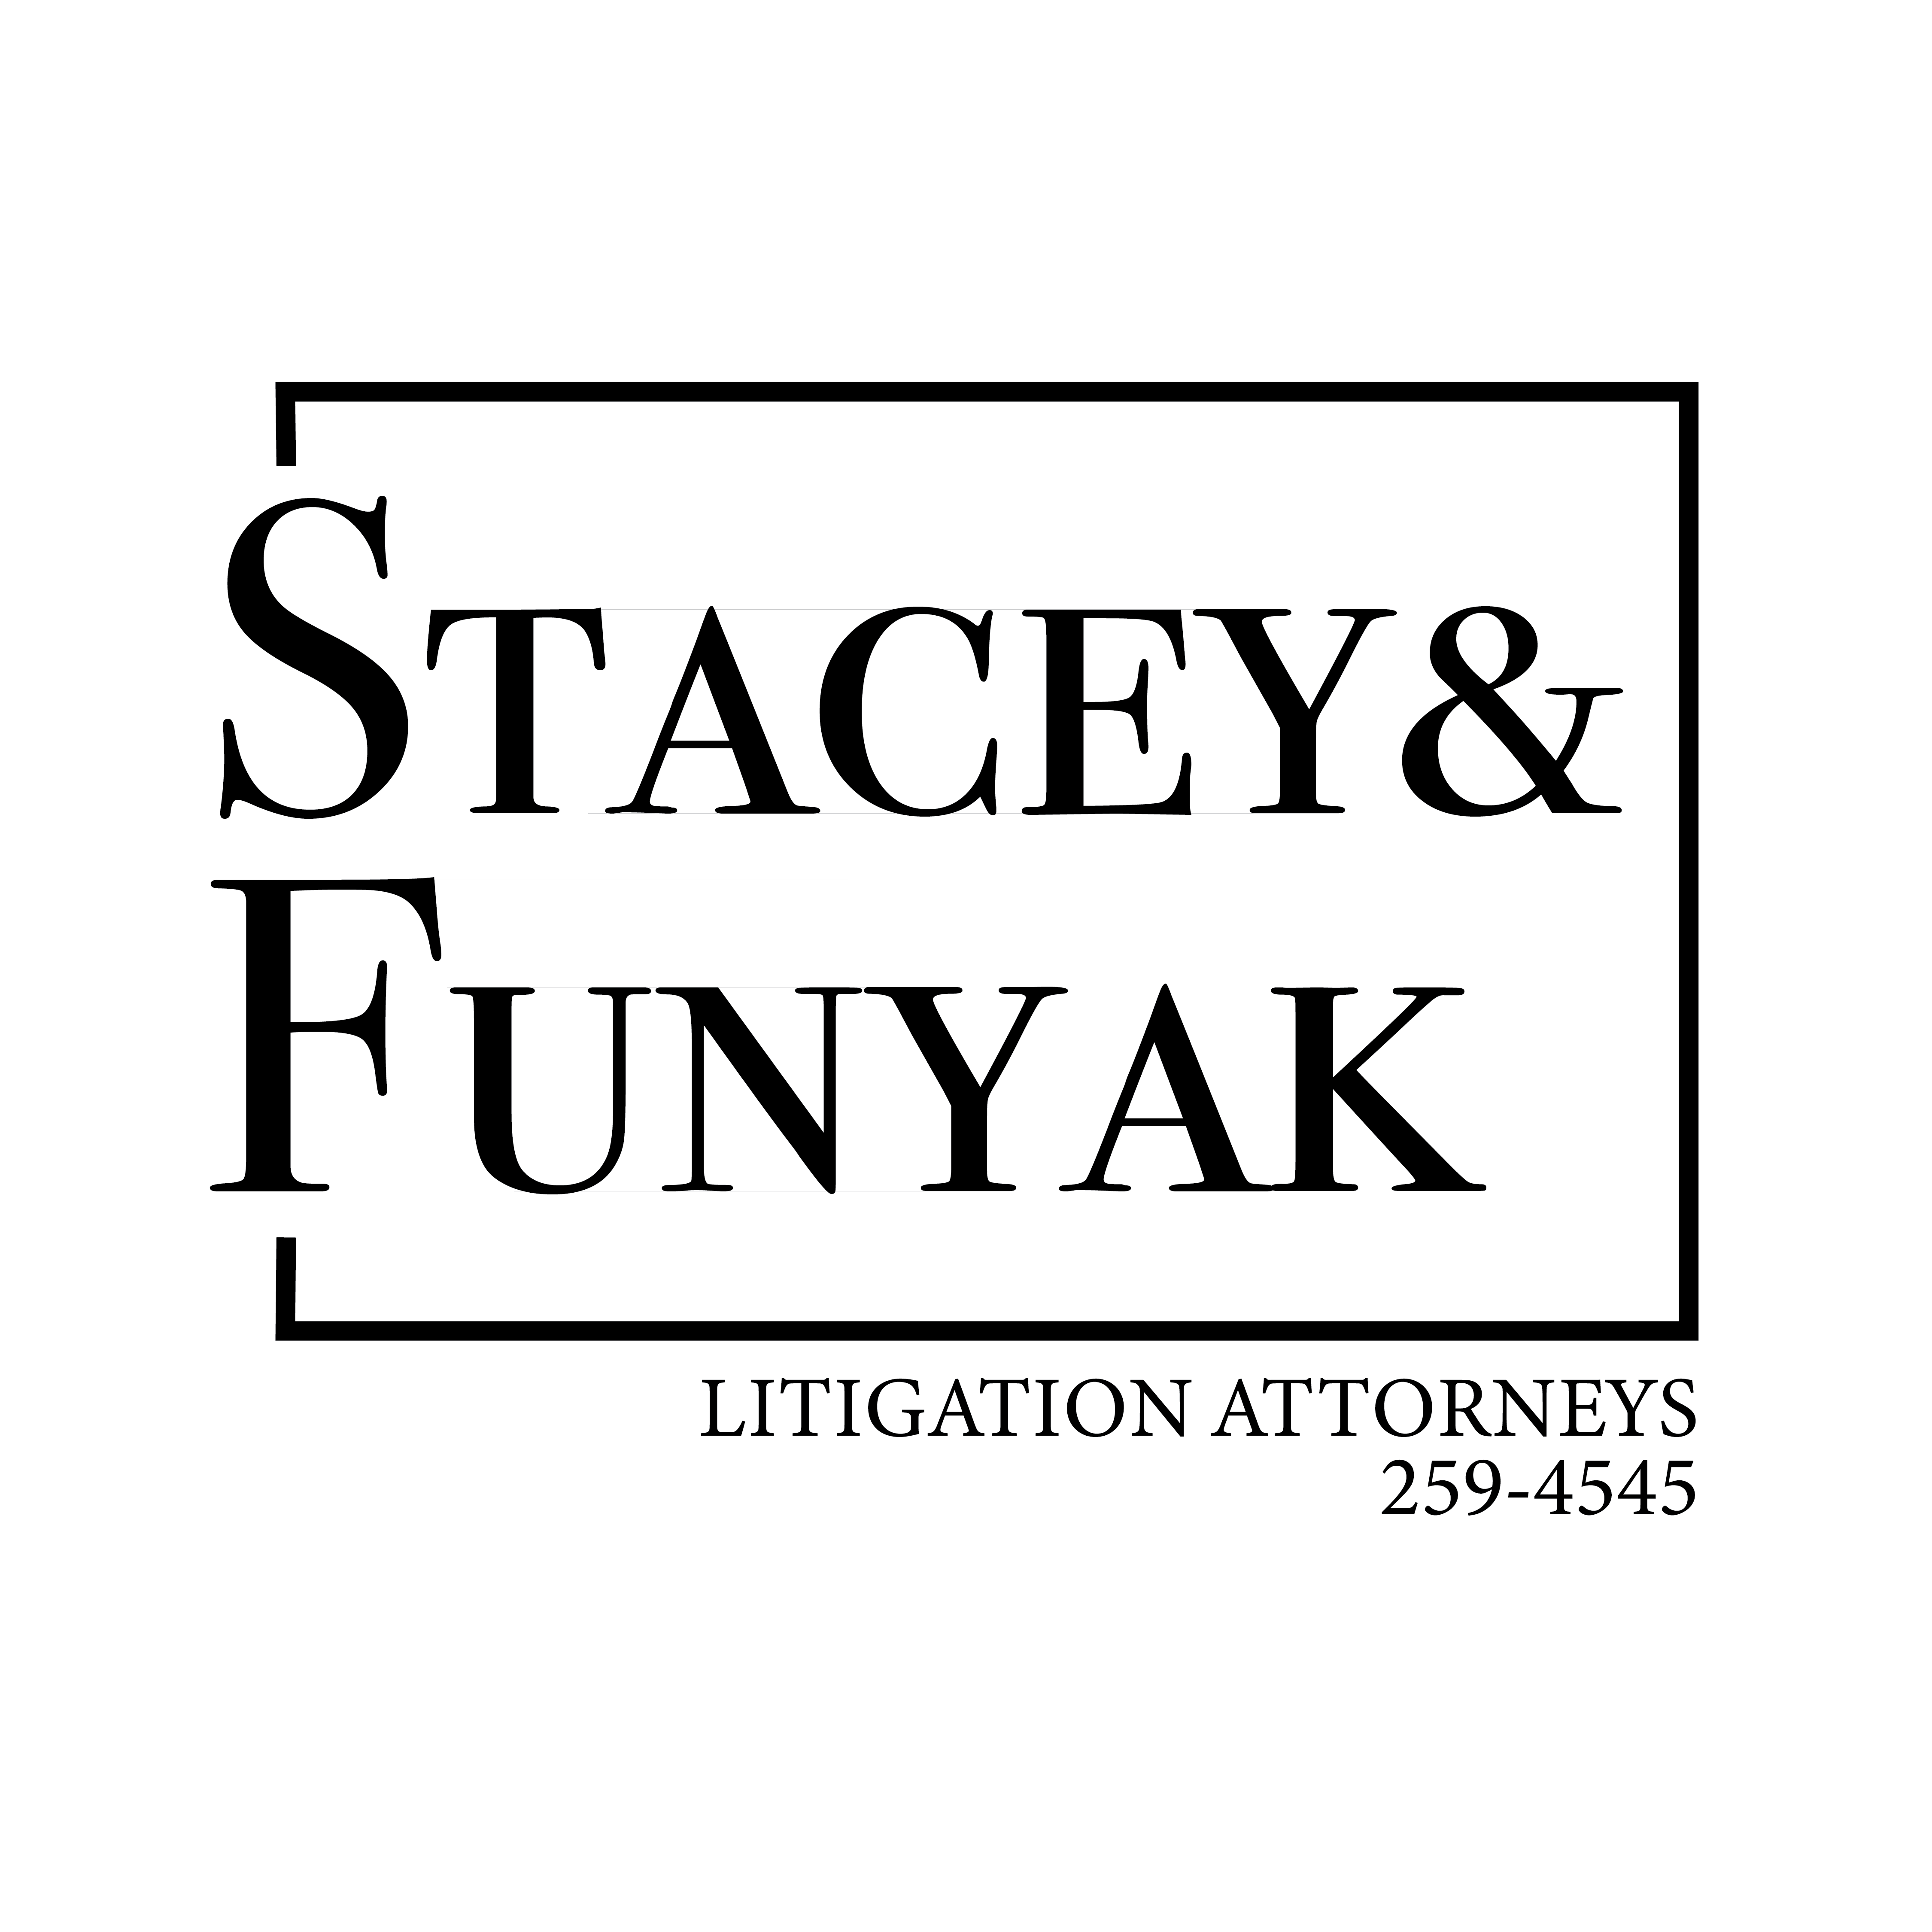 B. Stacey& Funyak (Silver)